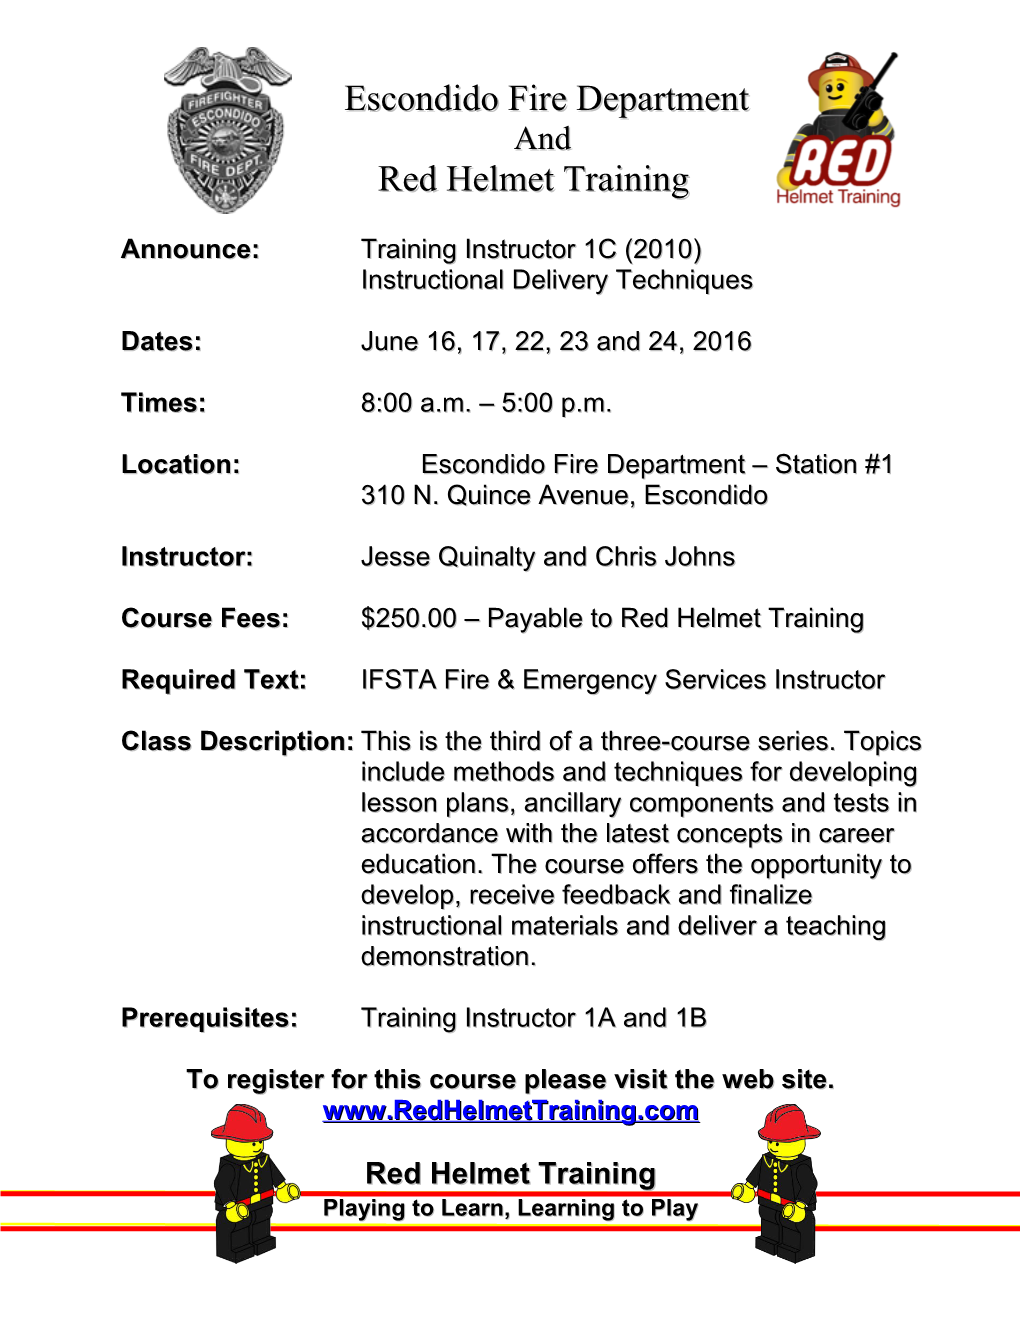 Red Helmet Training